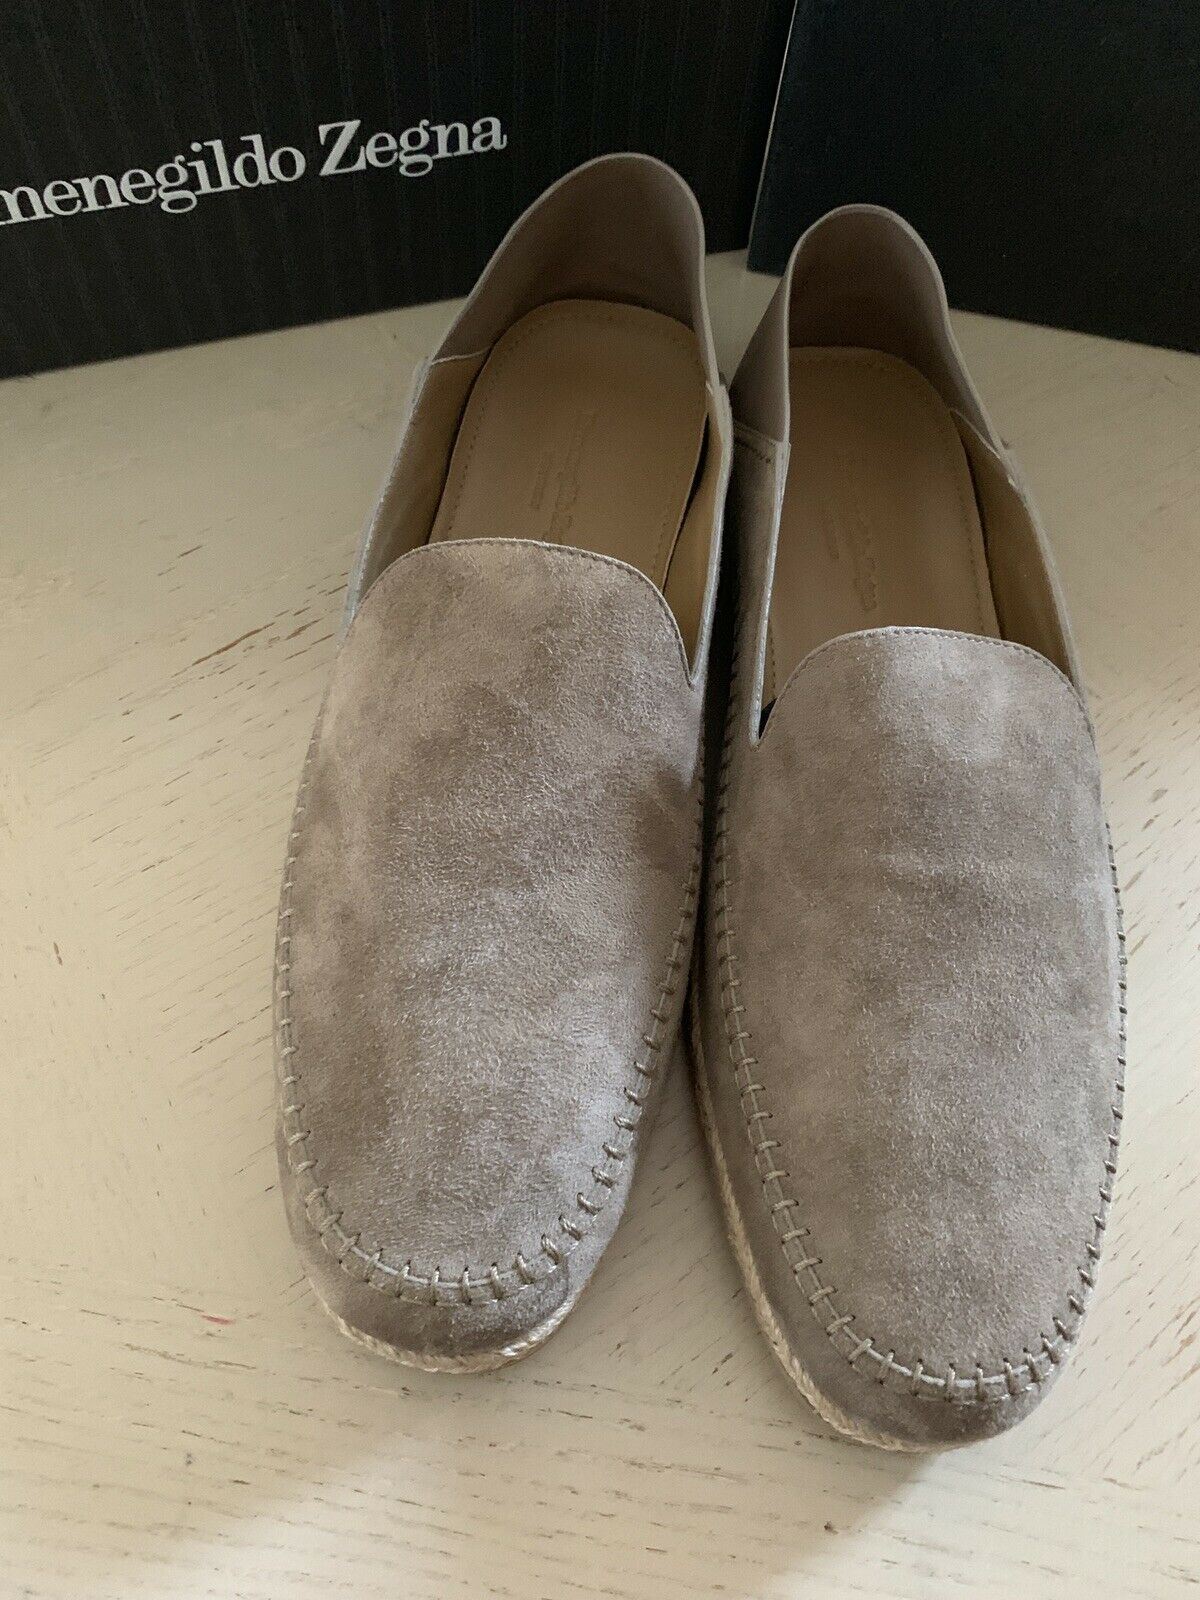 New $495 Ermenegildo Zegna Suede Espadrilles Shoes Nude 11 US Italy